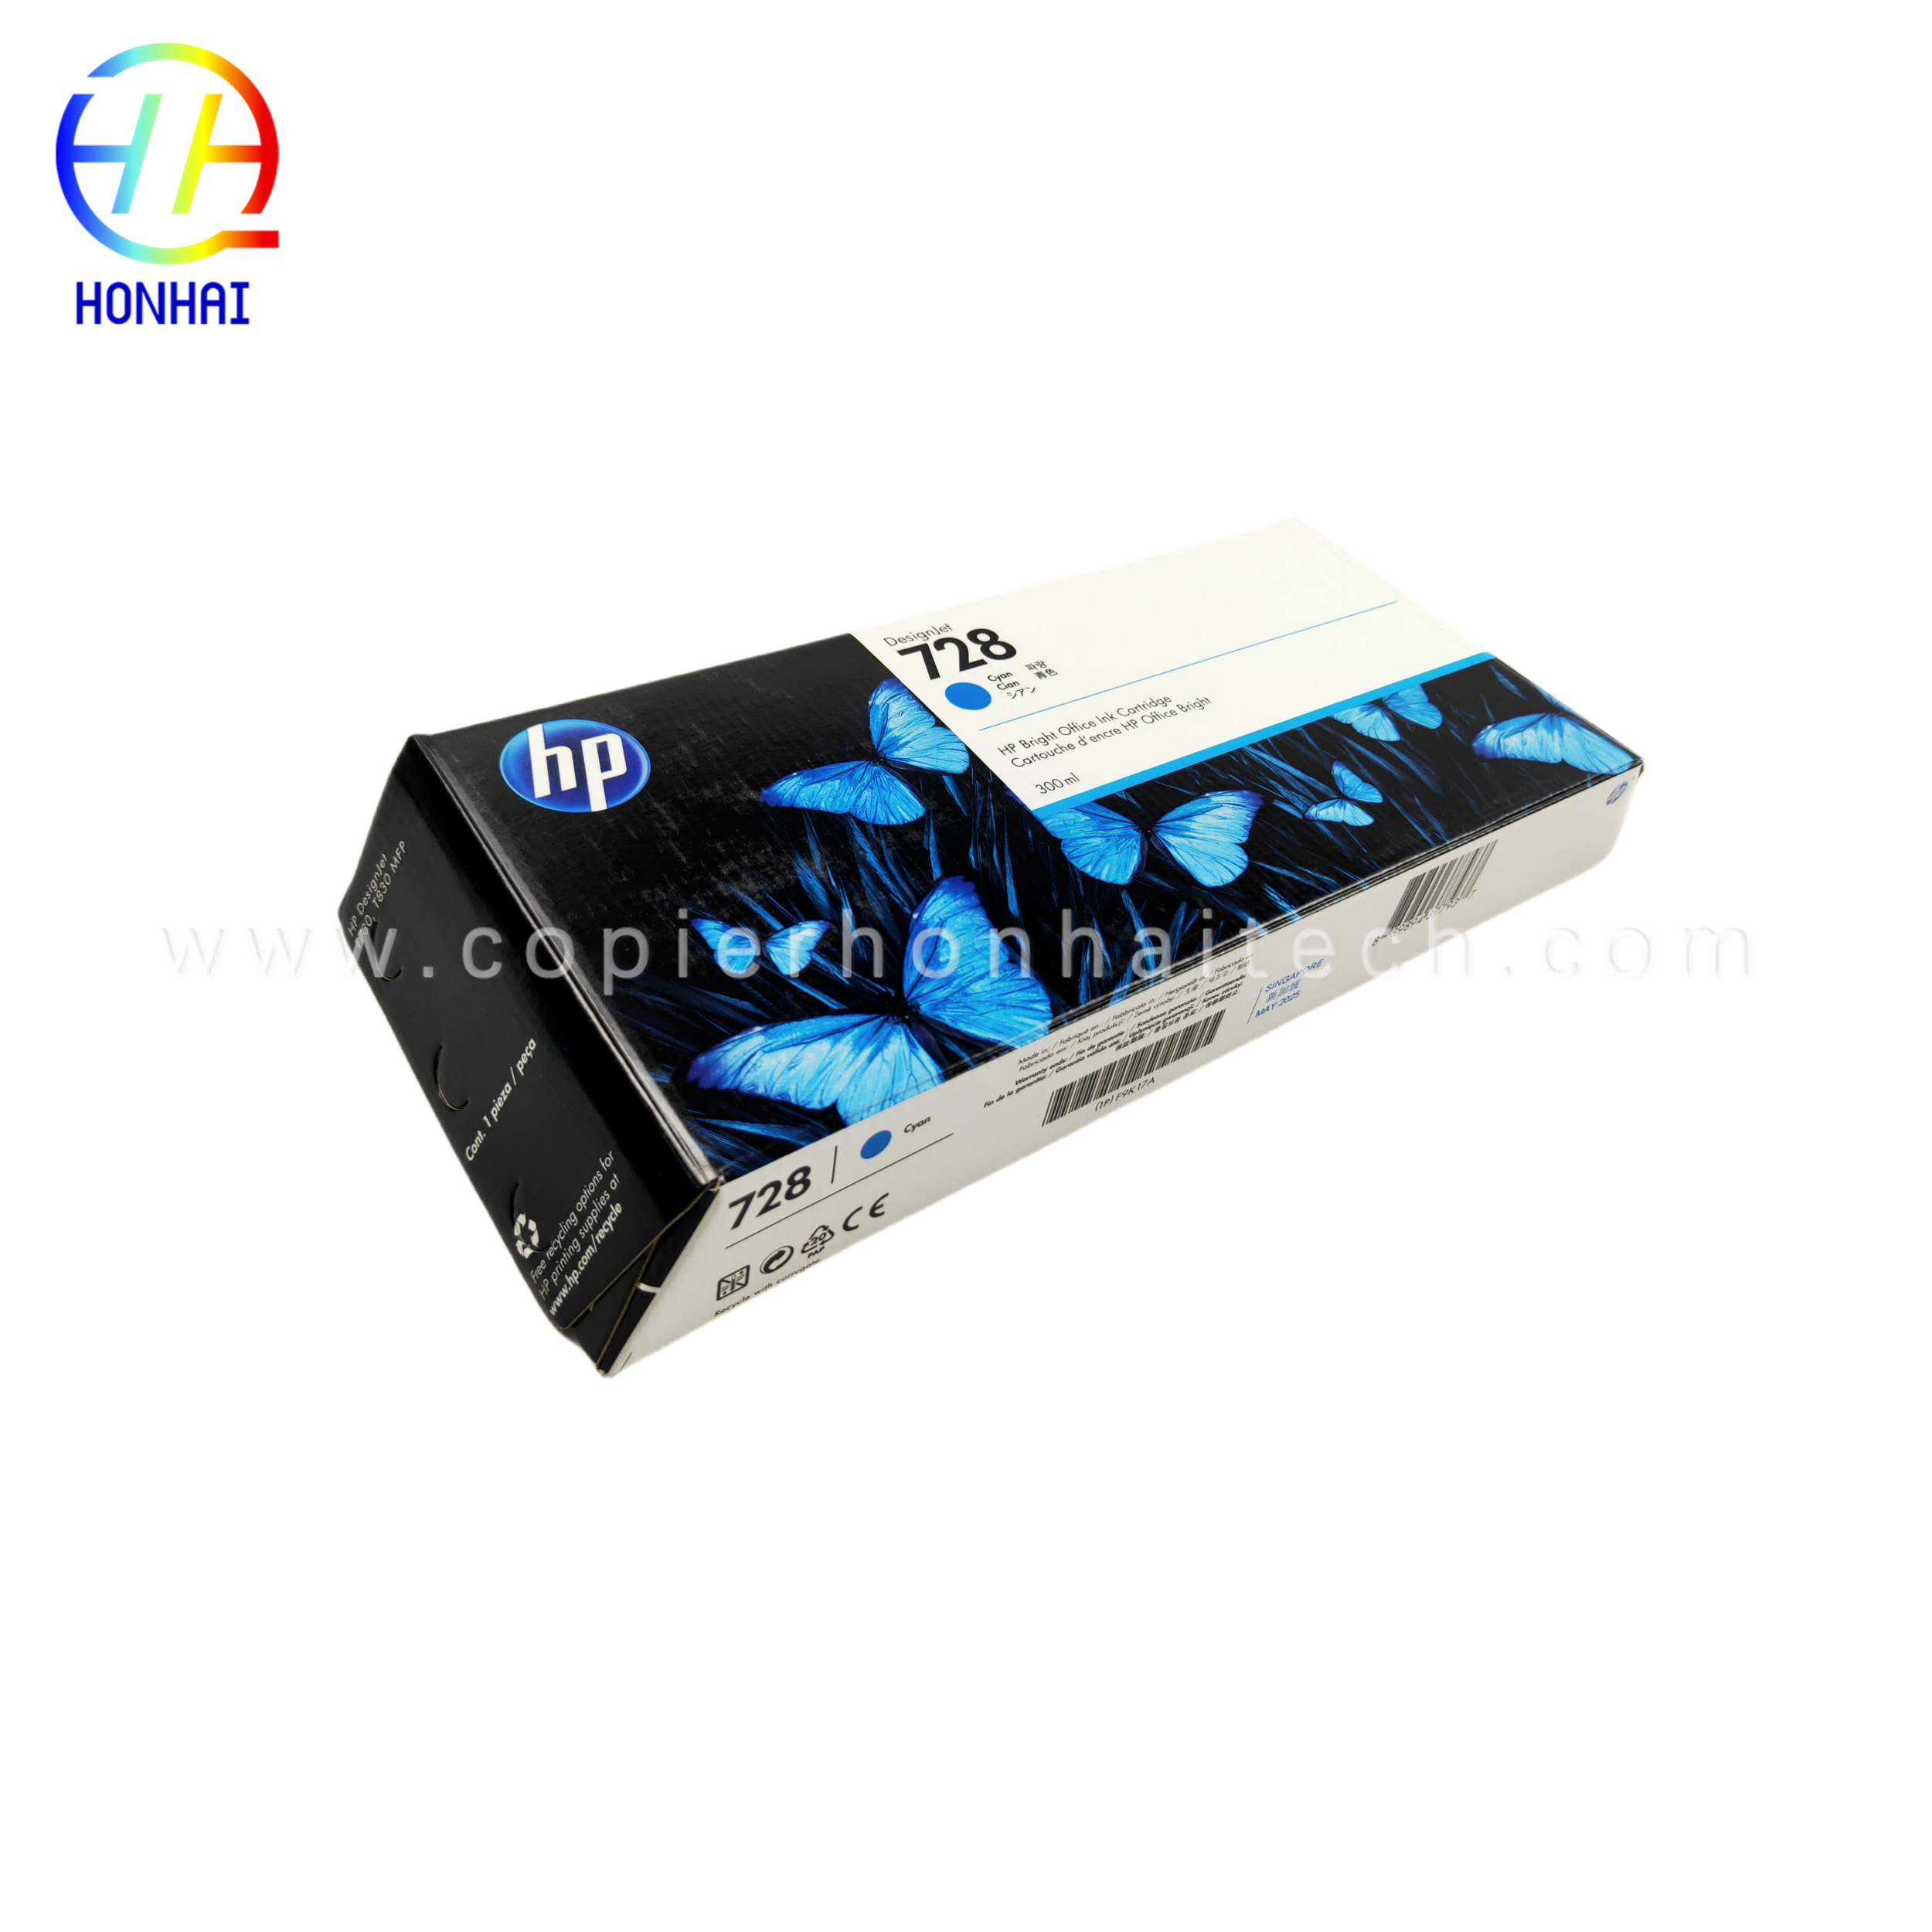 https://www.copierhonhaitech.com/original-new-ink-cartridge-cyan-for-hp-designjet-t730-and-t830-large-format-plotter-printers-and-hp-729-designjet-printhead- 728-f9k17a-toradh/